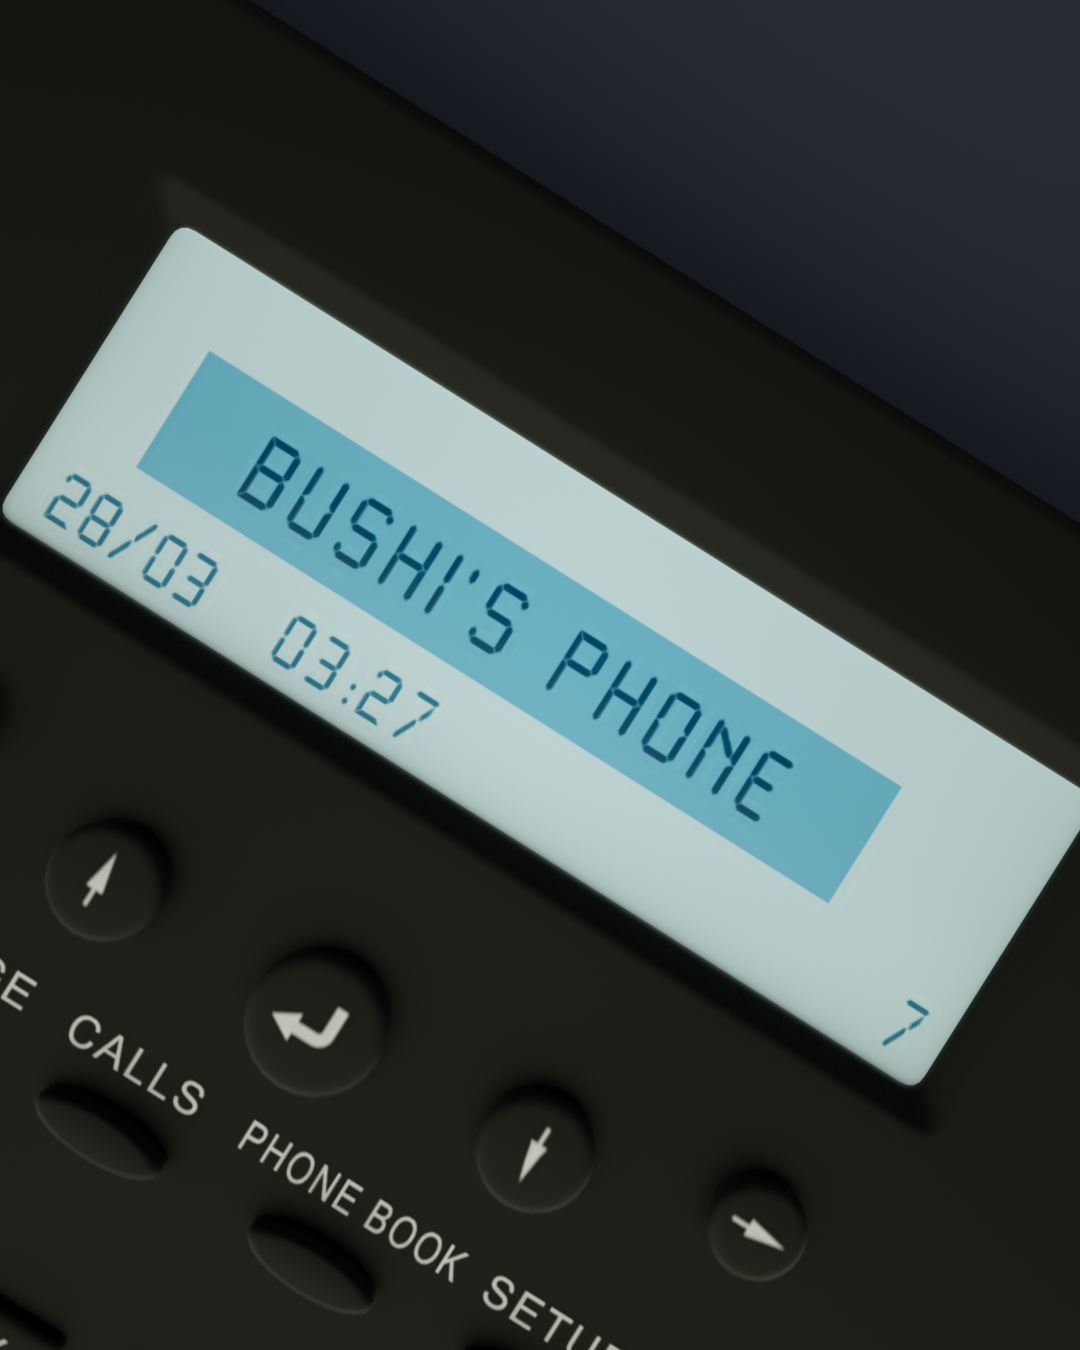 BU$HI – TELEPHONE